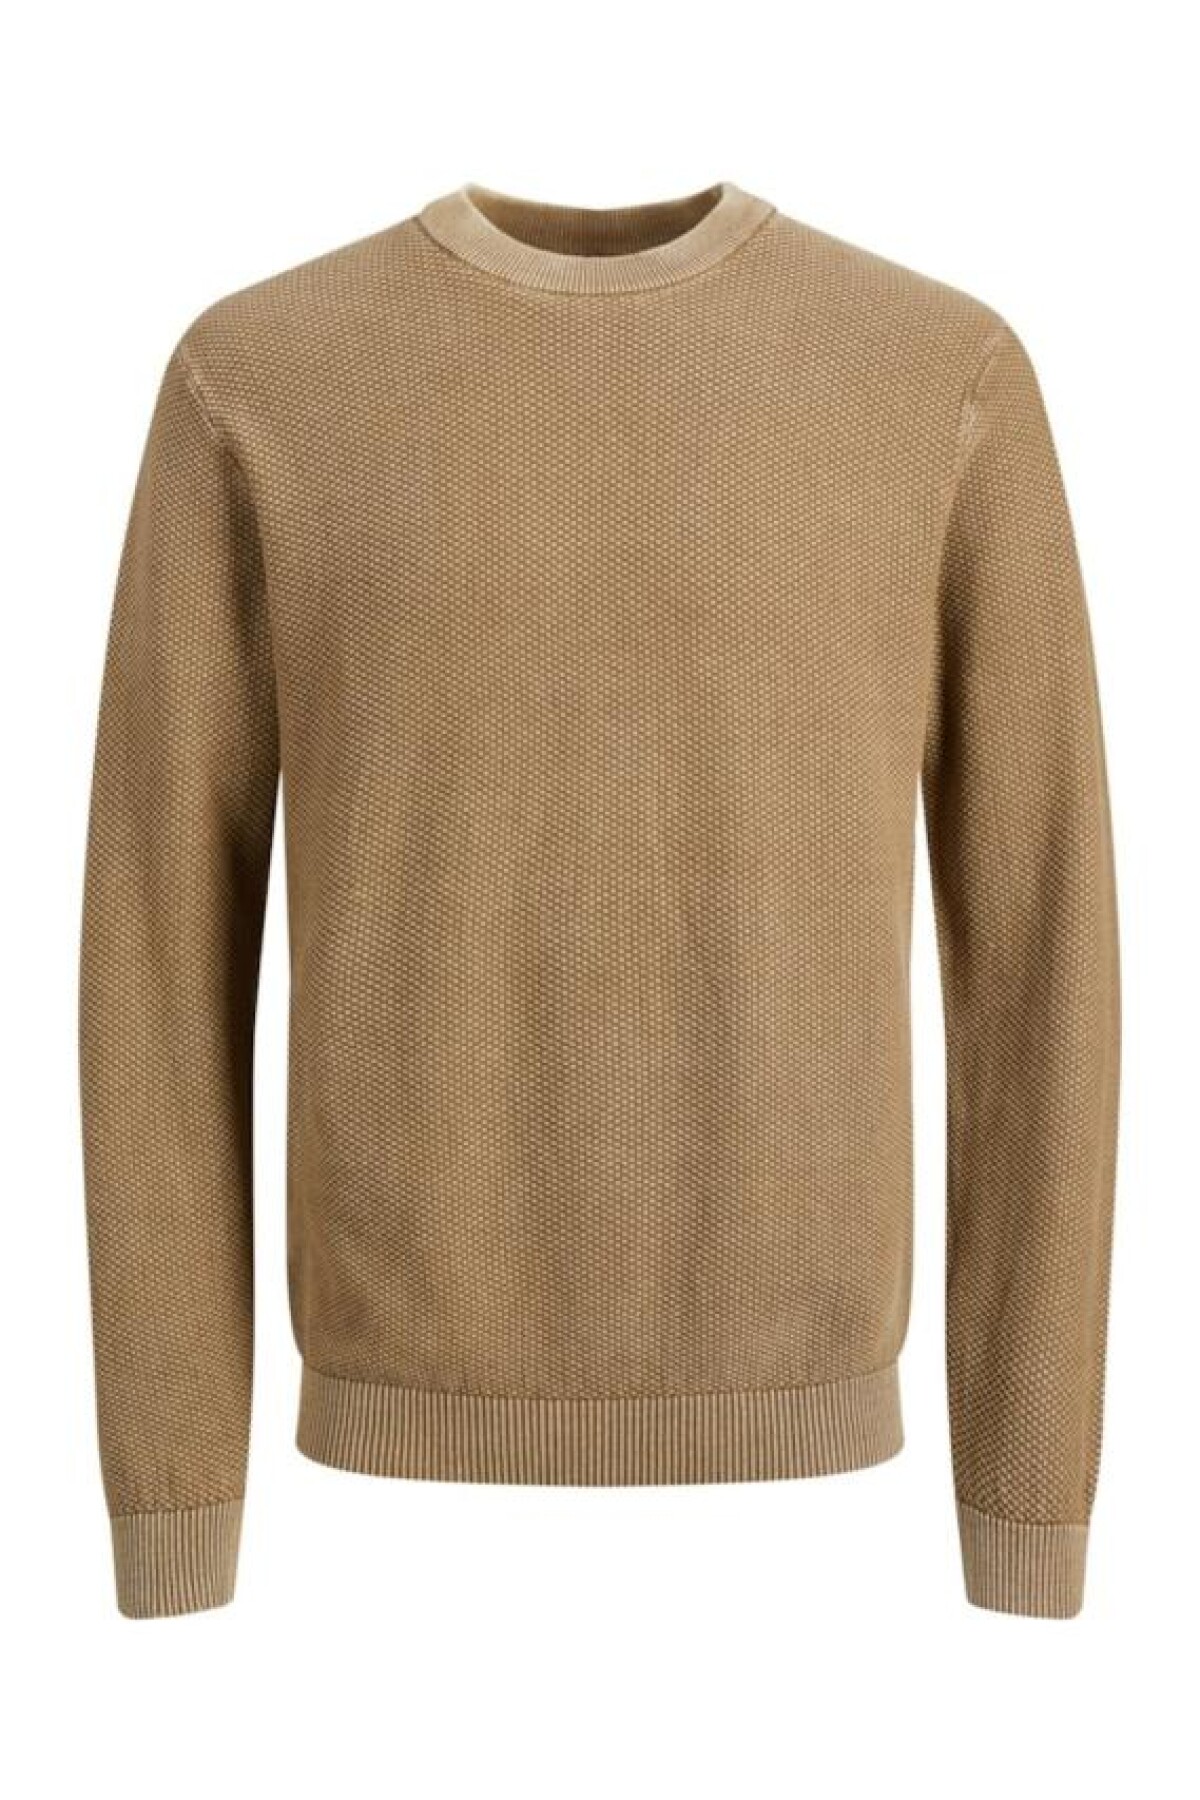 Sweater George Tejido Básico Rubber